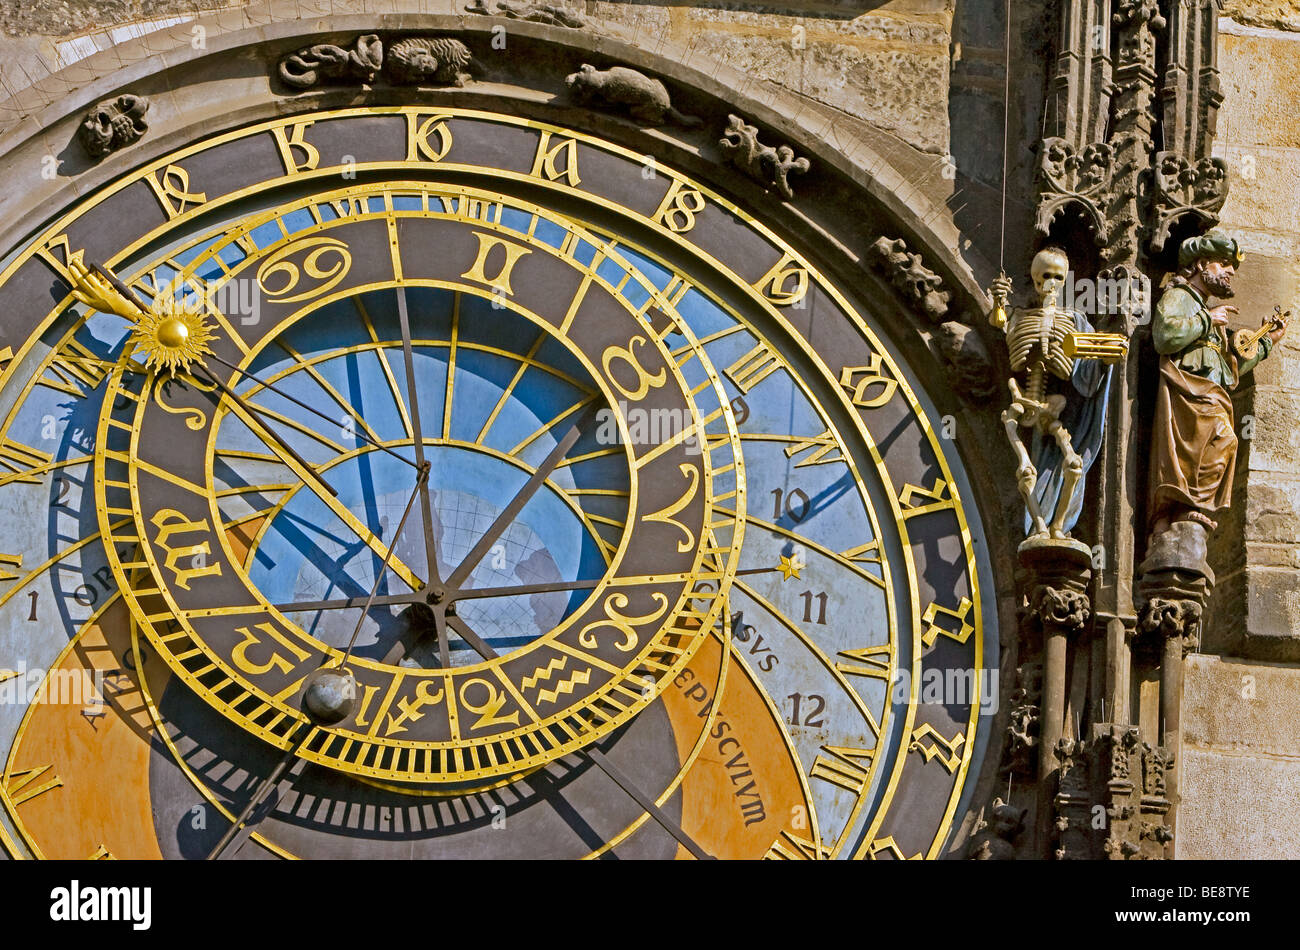 Astronomische Uhr, Altstädter Ring. Altstädter Ring, Prag, Tschechische Republik. Stockfoto